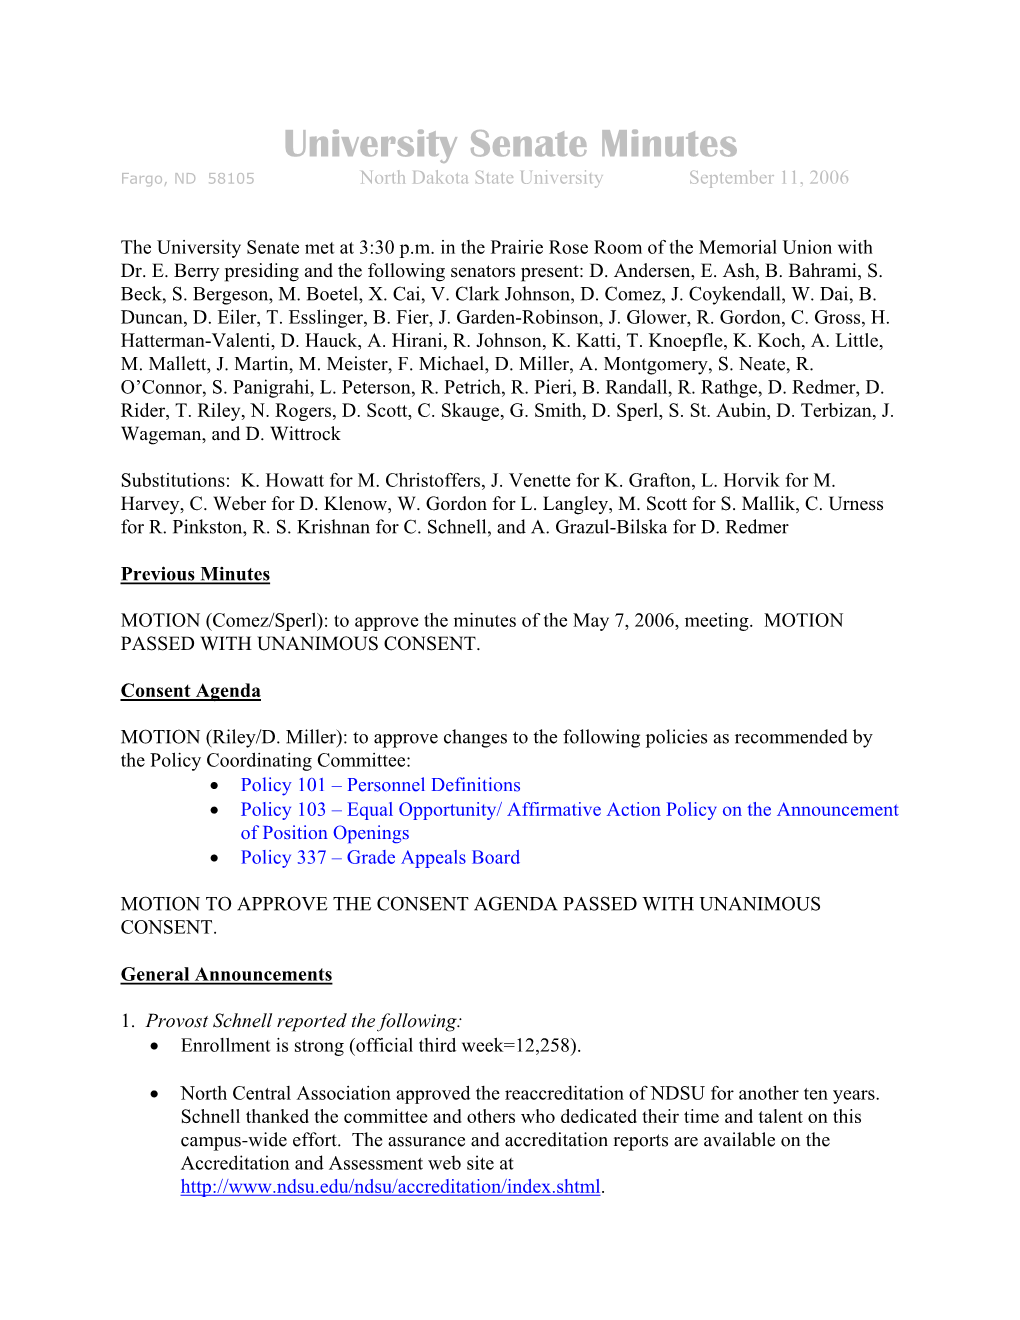 NDSU University Senate Meeting Minutes -- 2006-2007